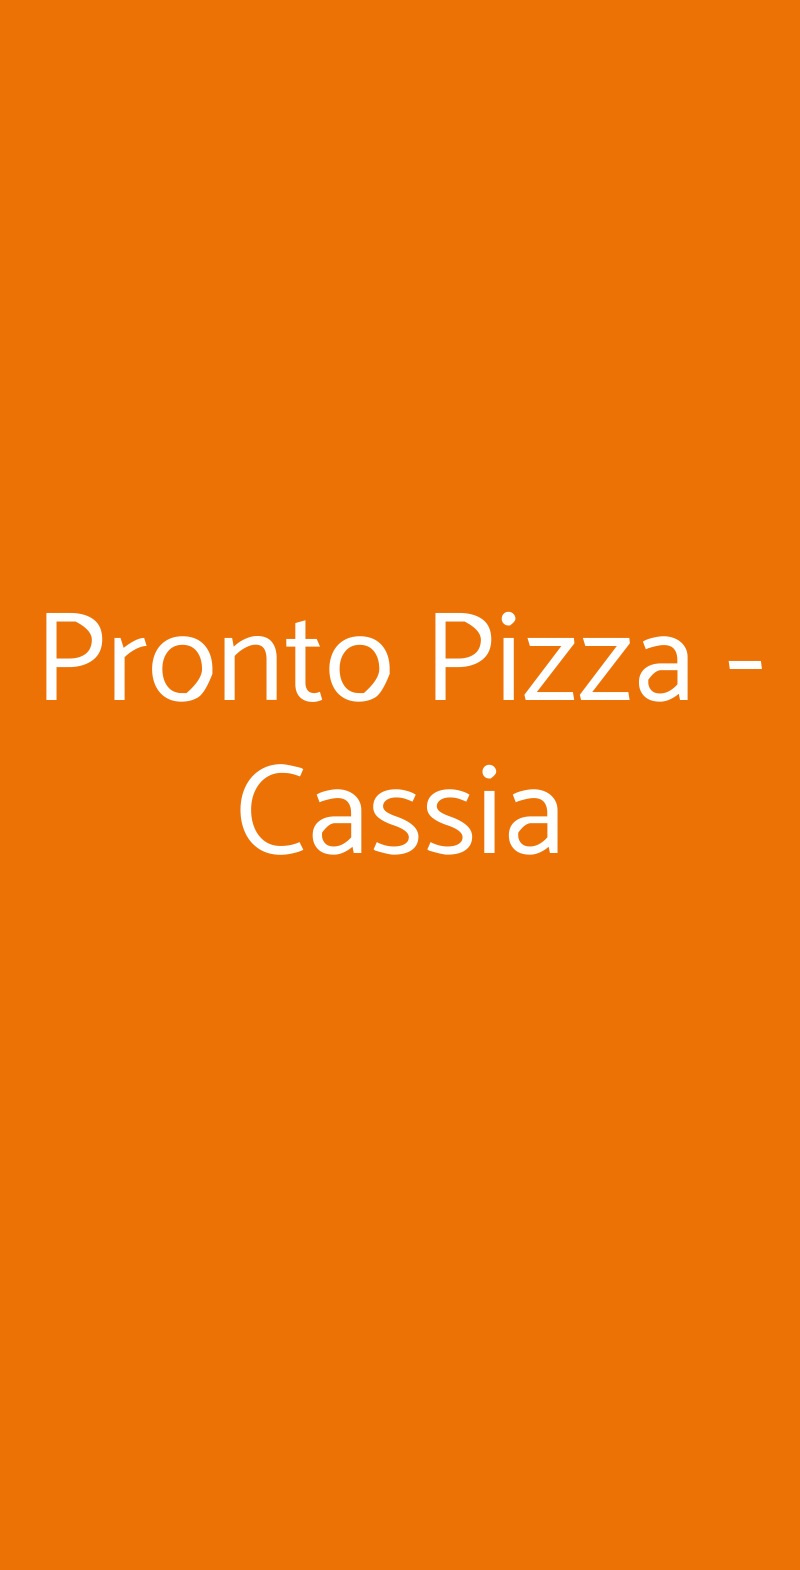 Pronto Pizza - Cassia Firenze menù 1 pagina